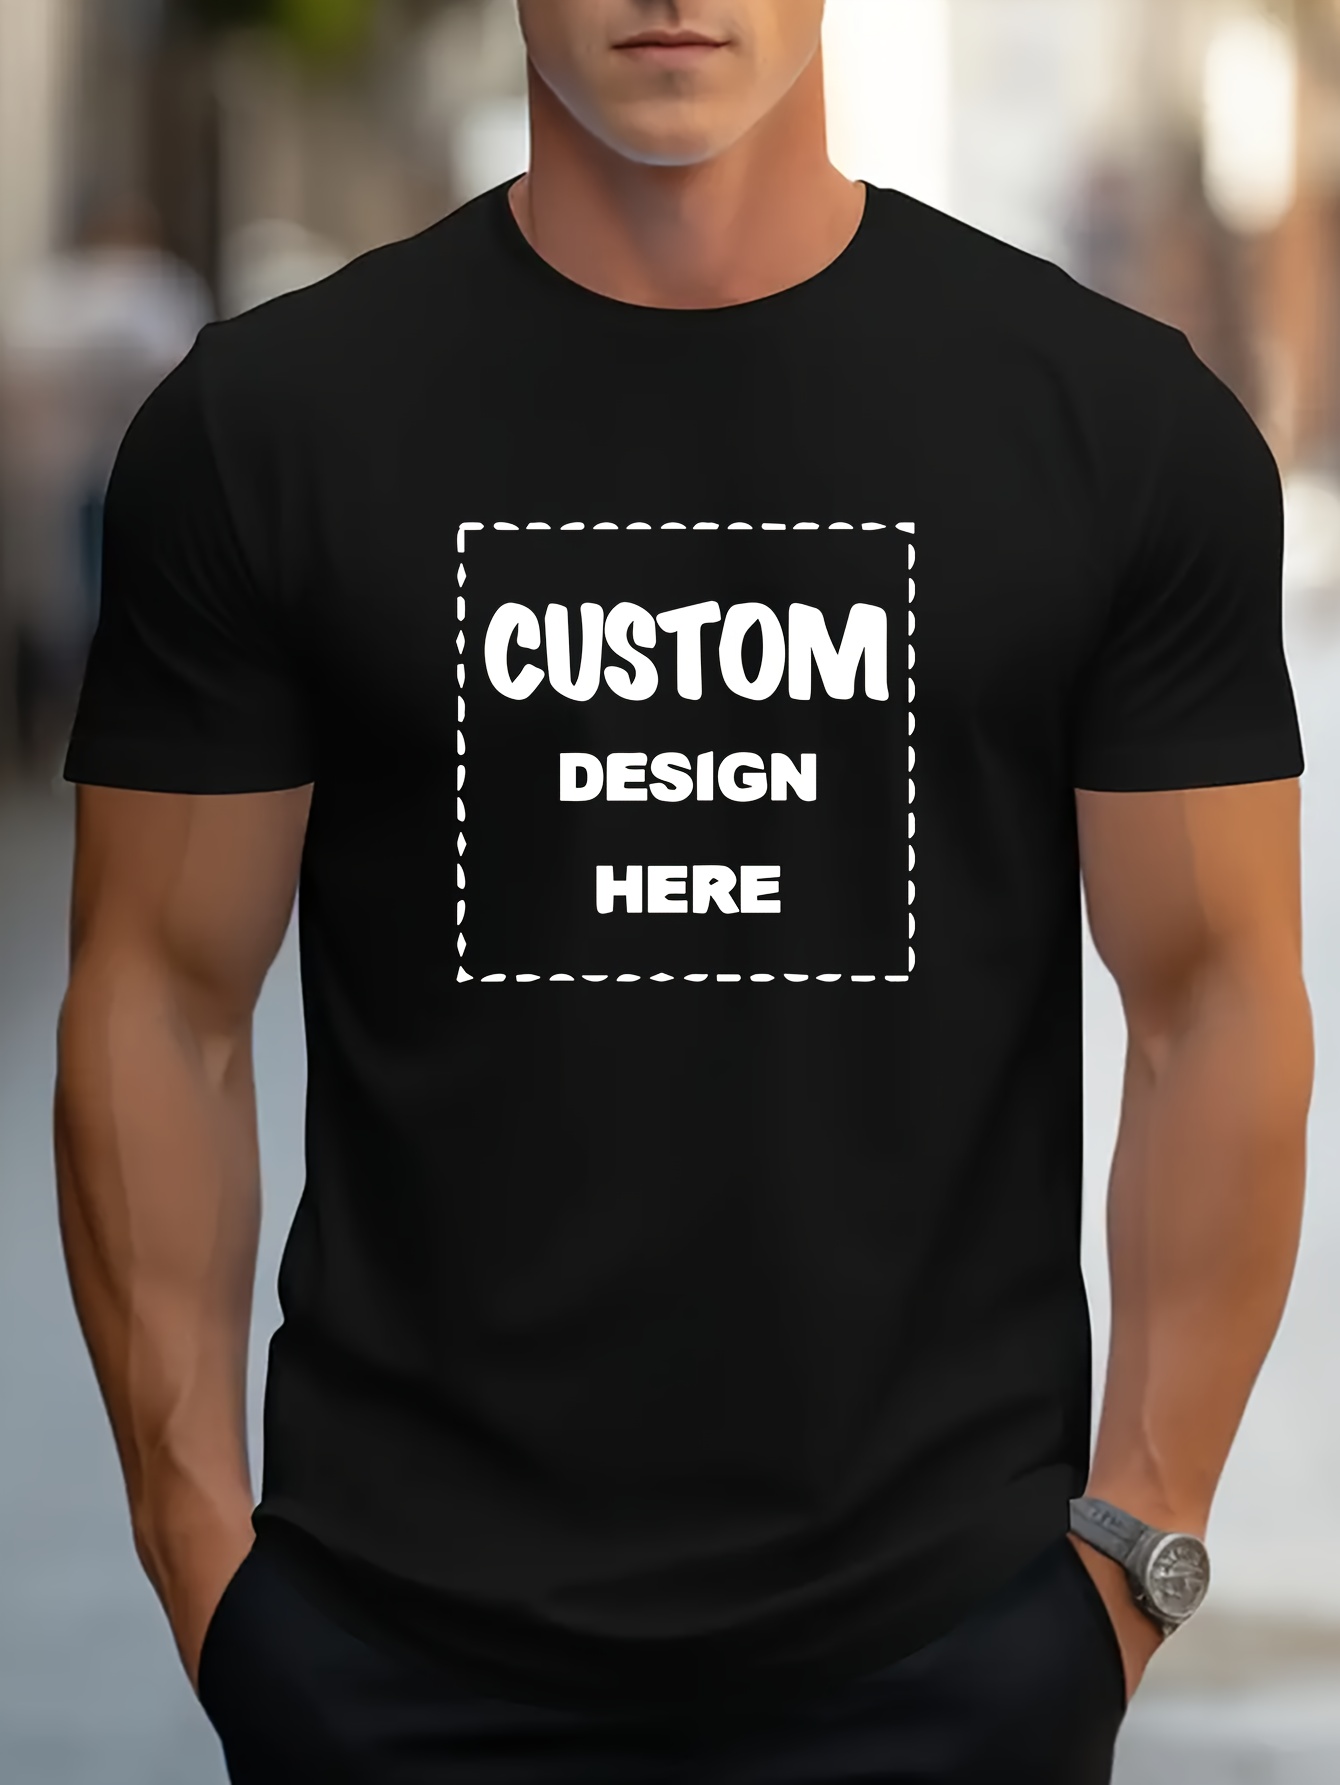 CUSTOM Print Tee Shirt, Tees For Men, Casual Short Sleeve T-shirt For Summer